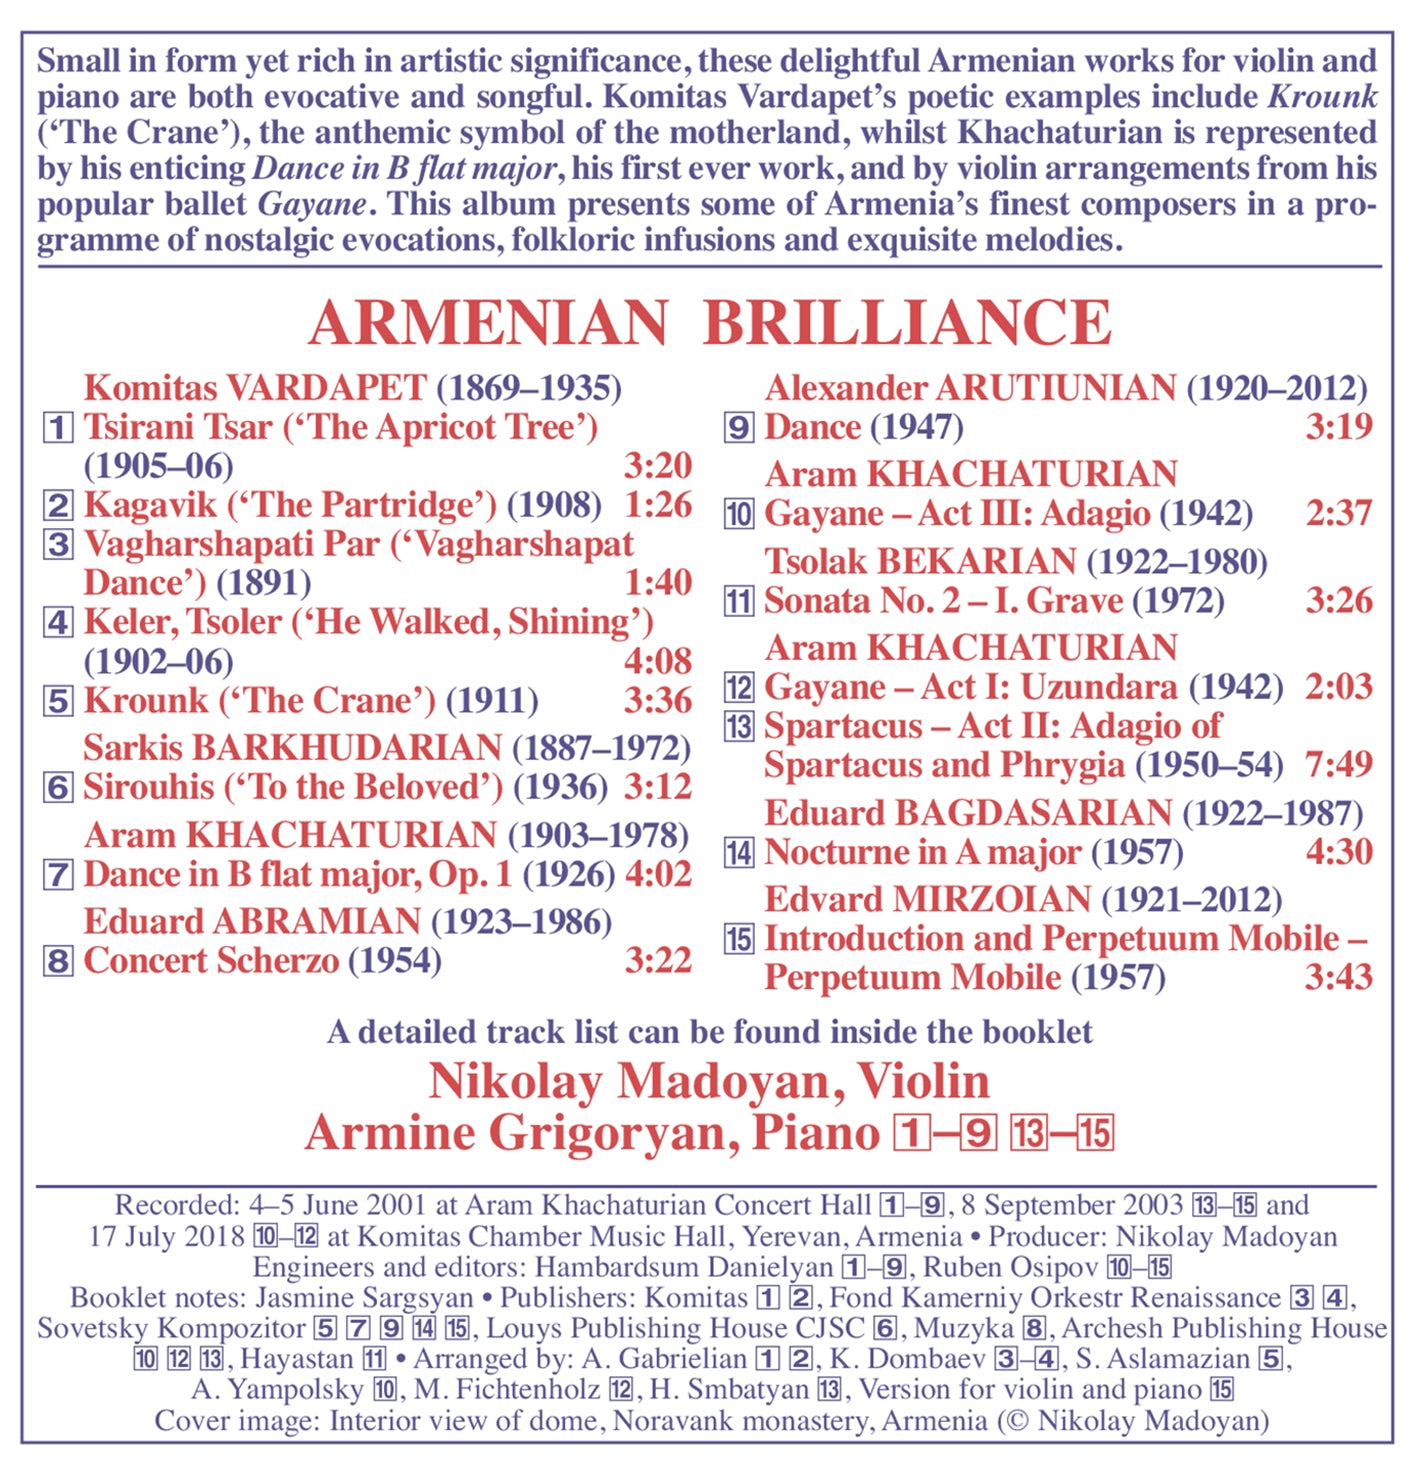 Armenian Brilliance / Nikolay Madoyan; Armine Grigoryan